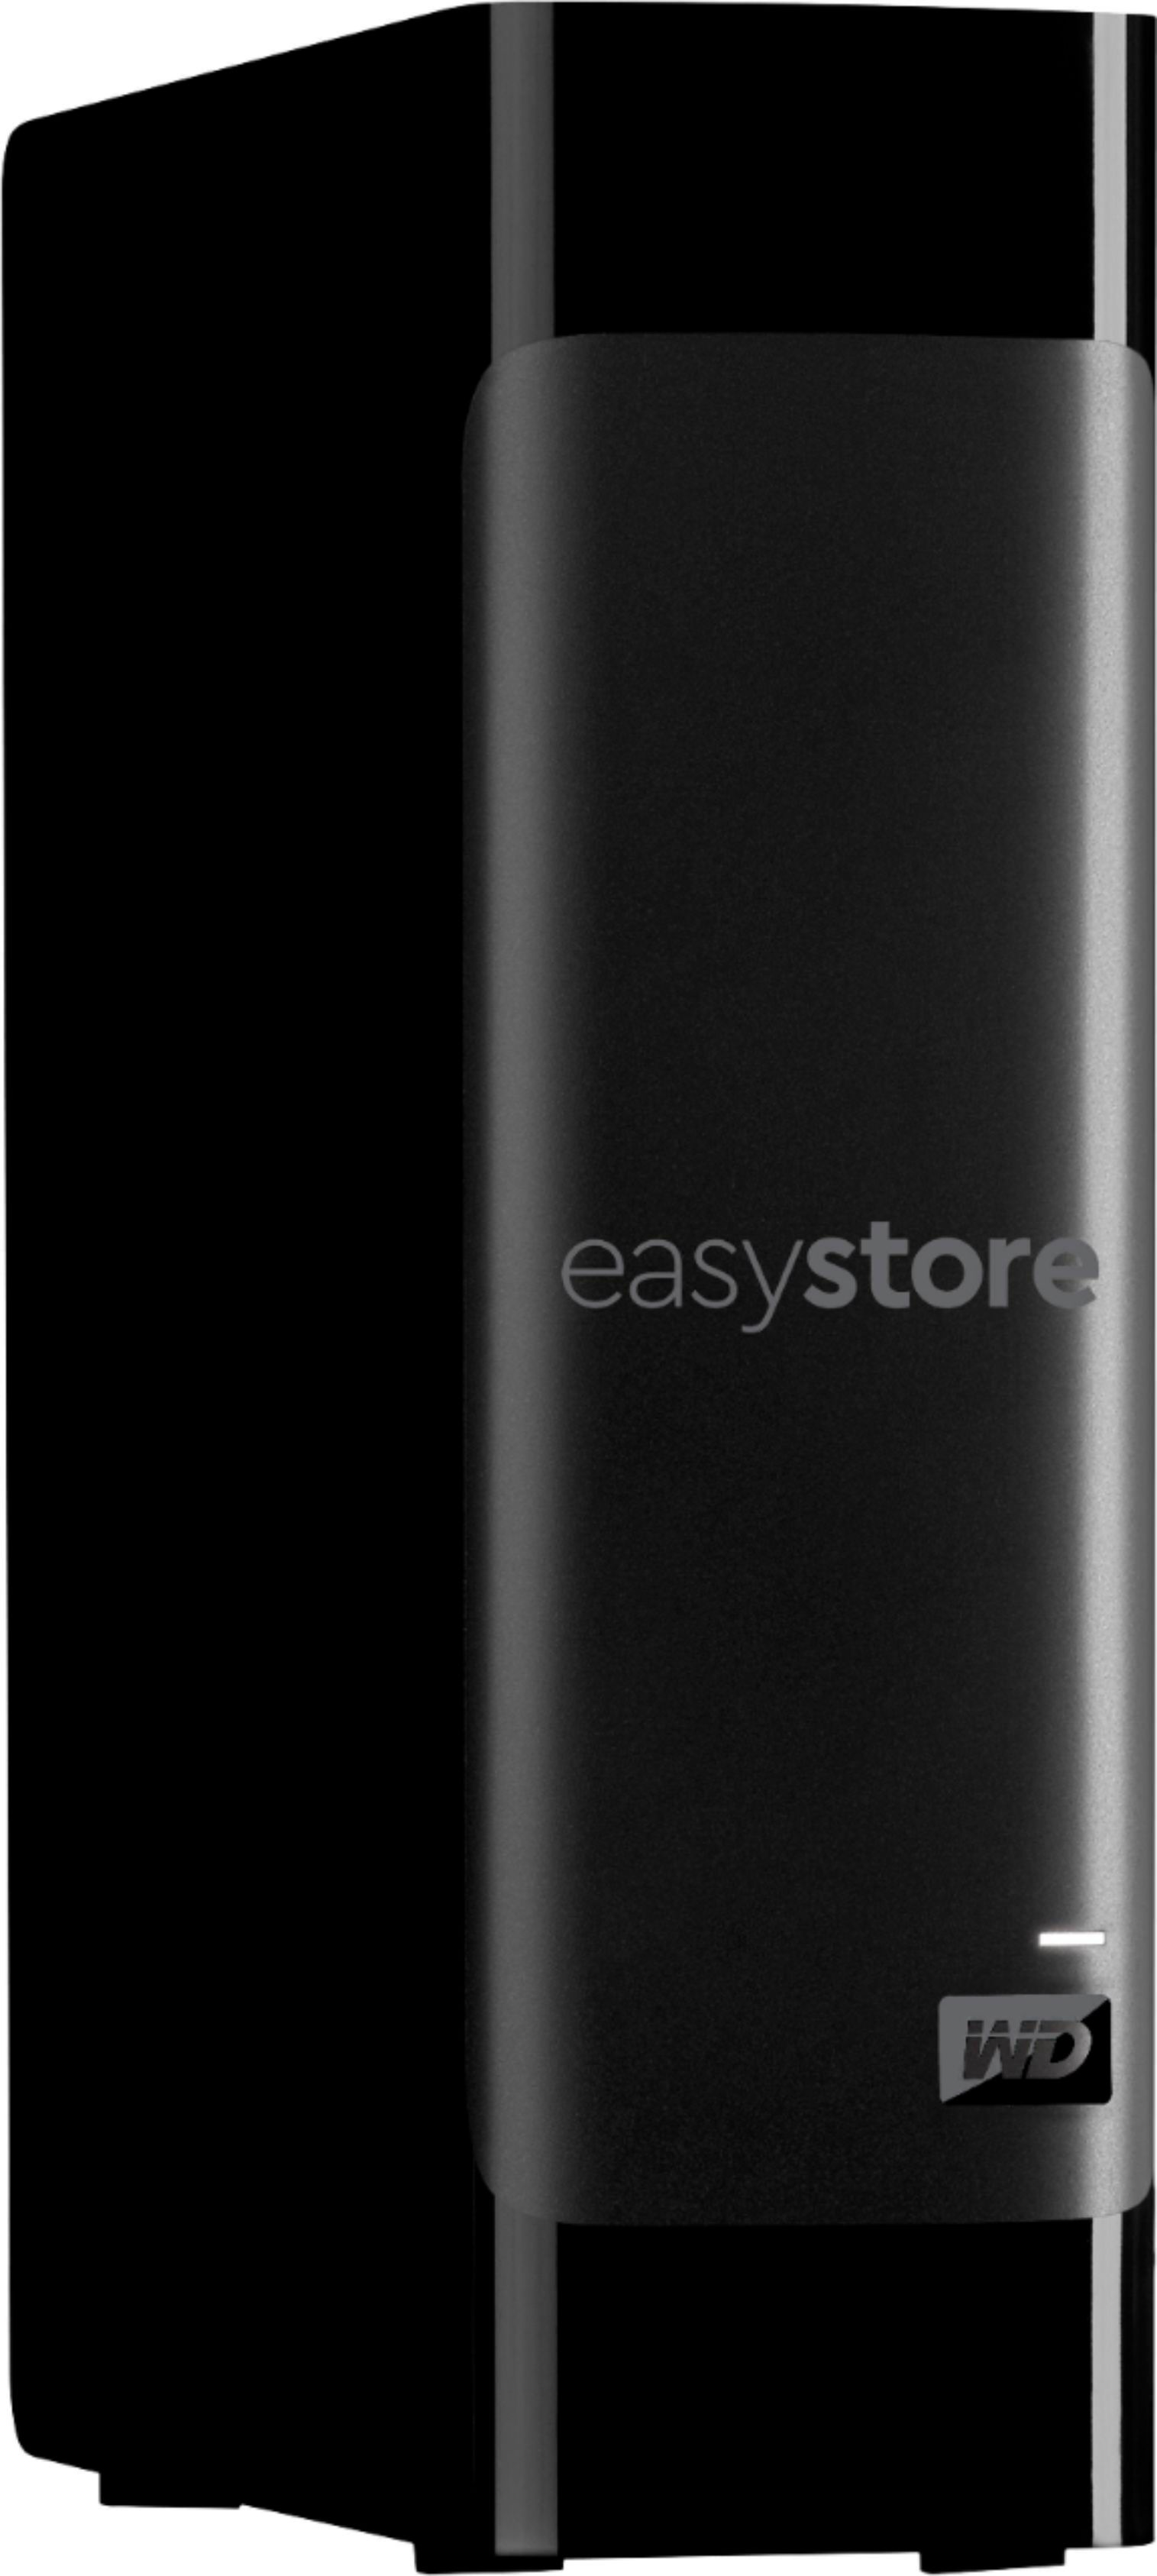 Left View: WD - easystore 16TB External USB 3.0 Hard Drive - Black